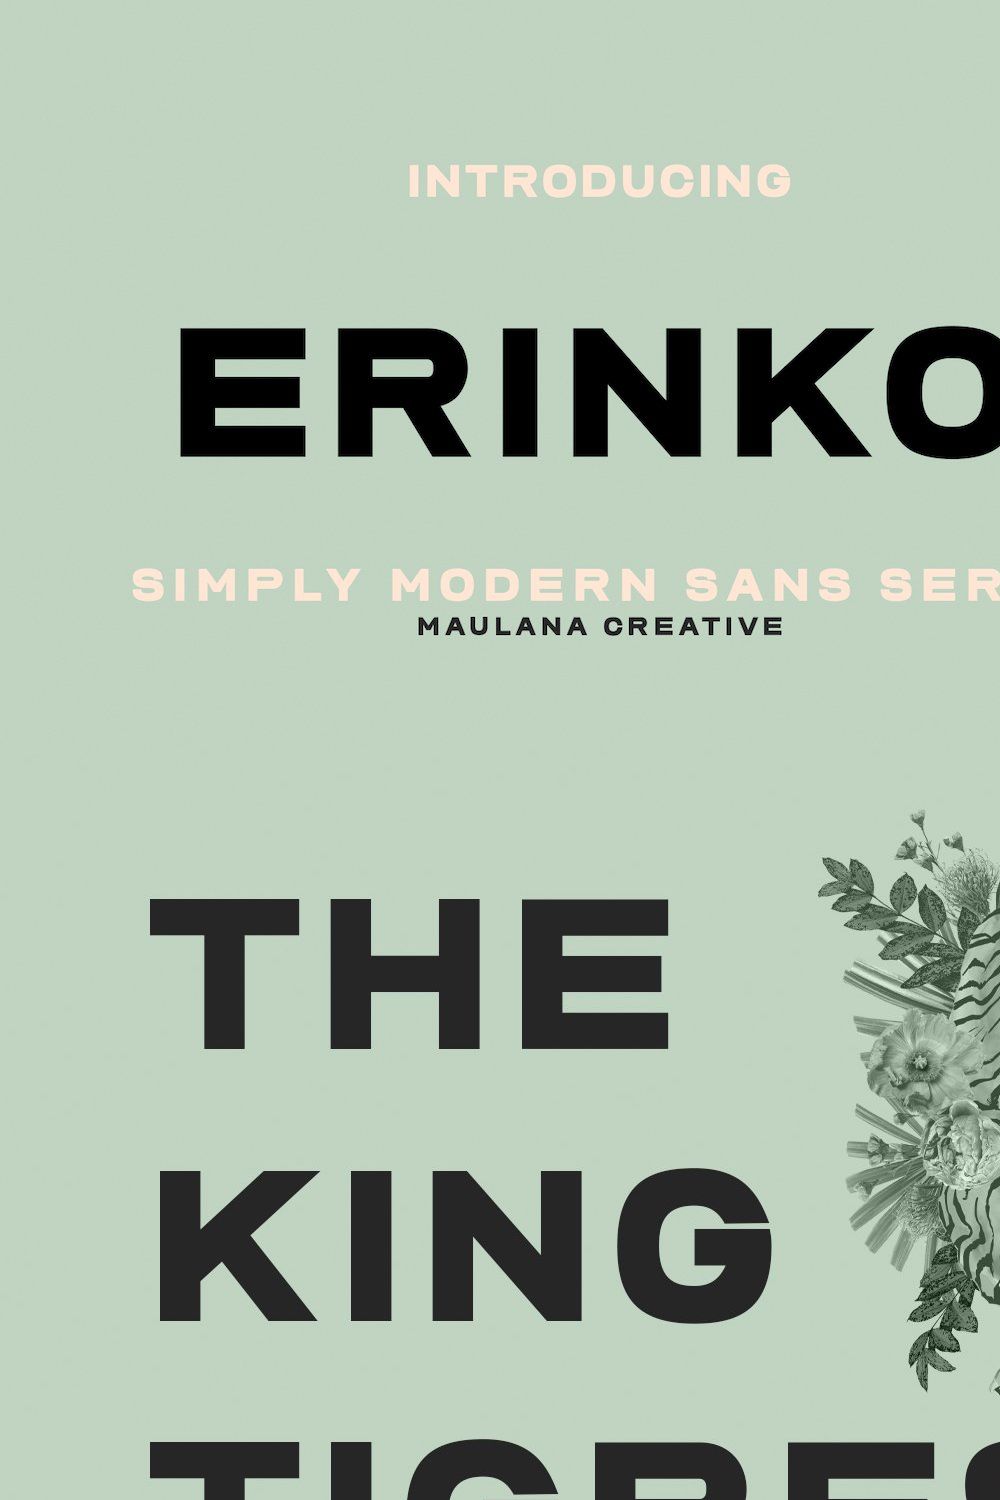 Erinko Simply Modern Sans Serif pinterest preview image.